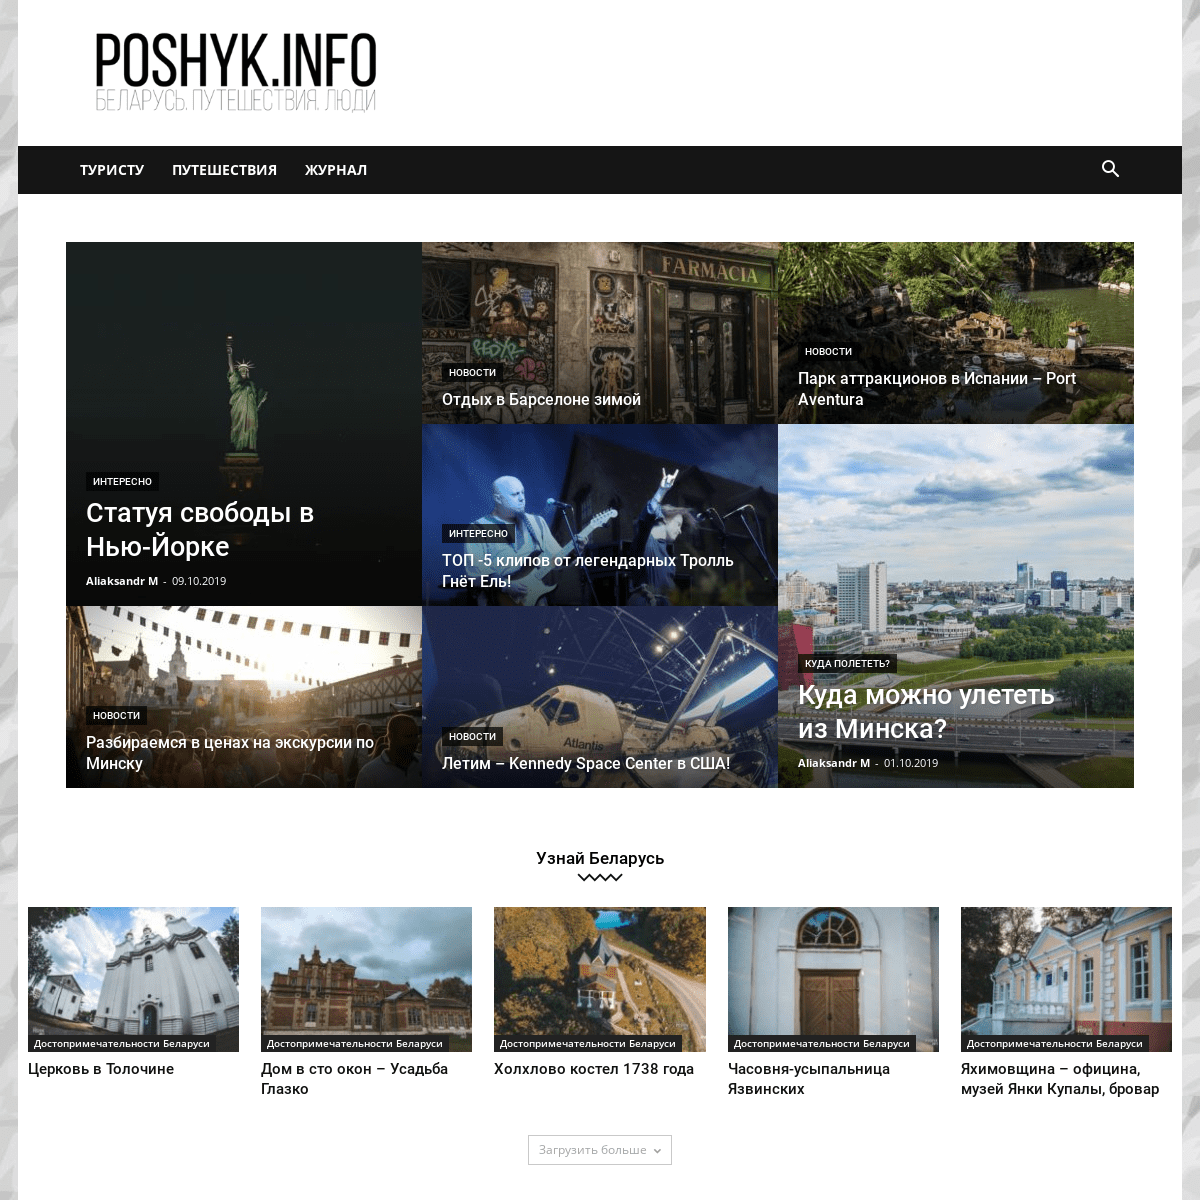 A complete backup of poshyk.info